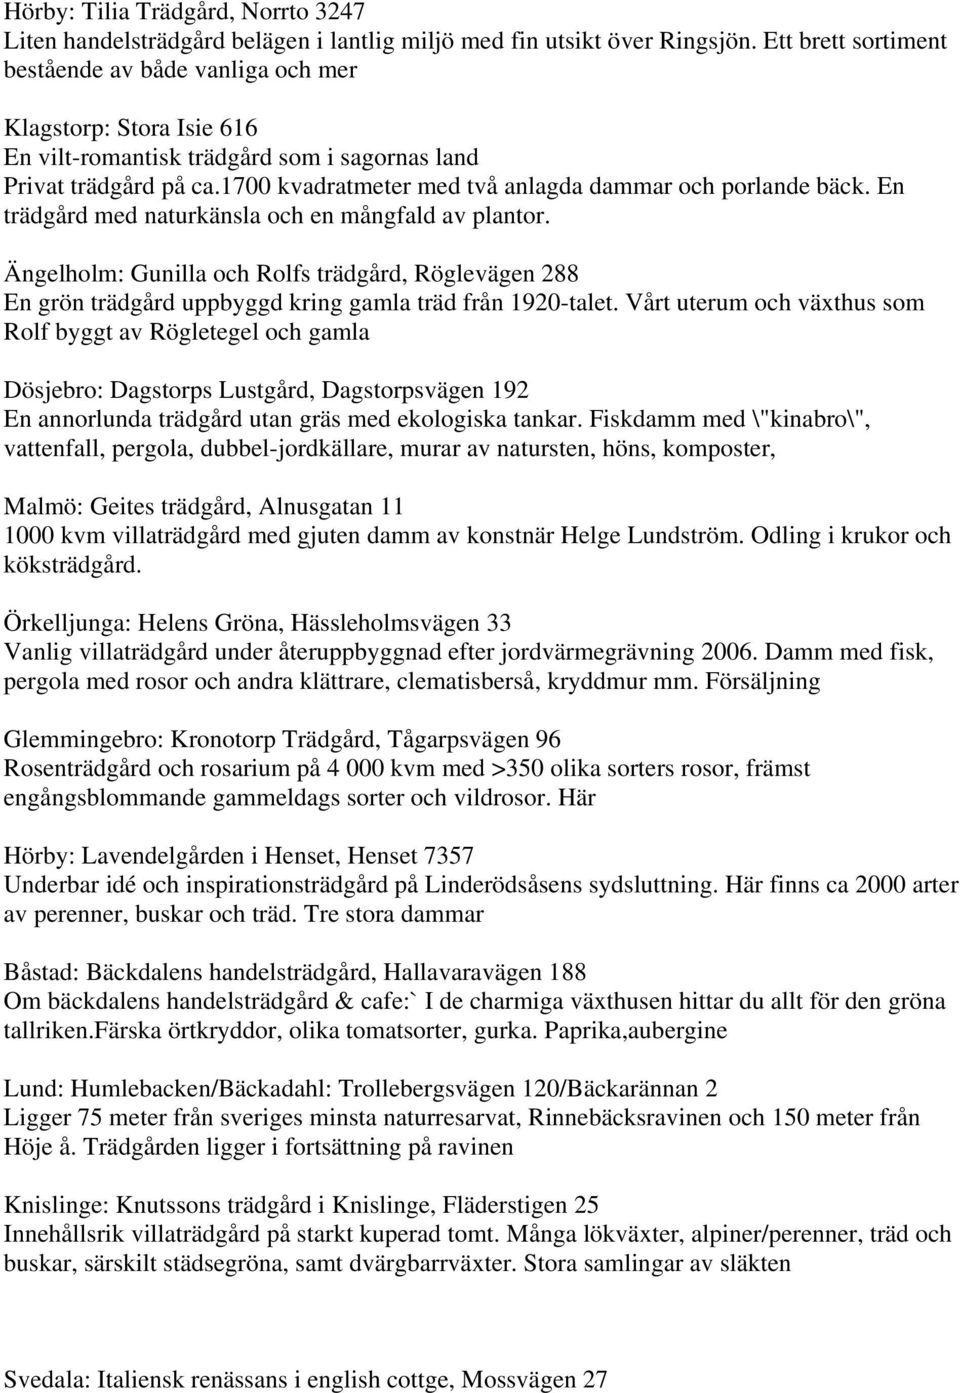 Trädgårdar lokalt Gotland - PDF Free Download